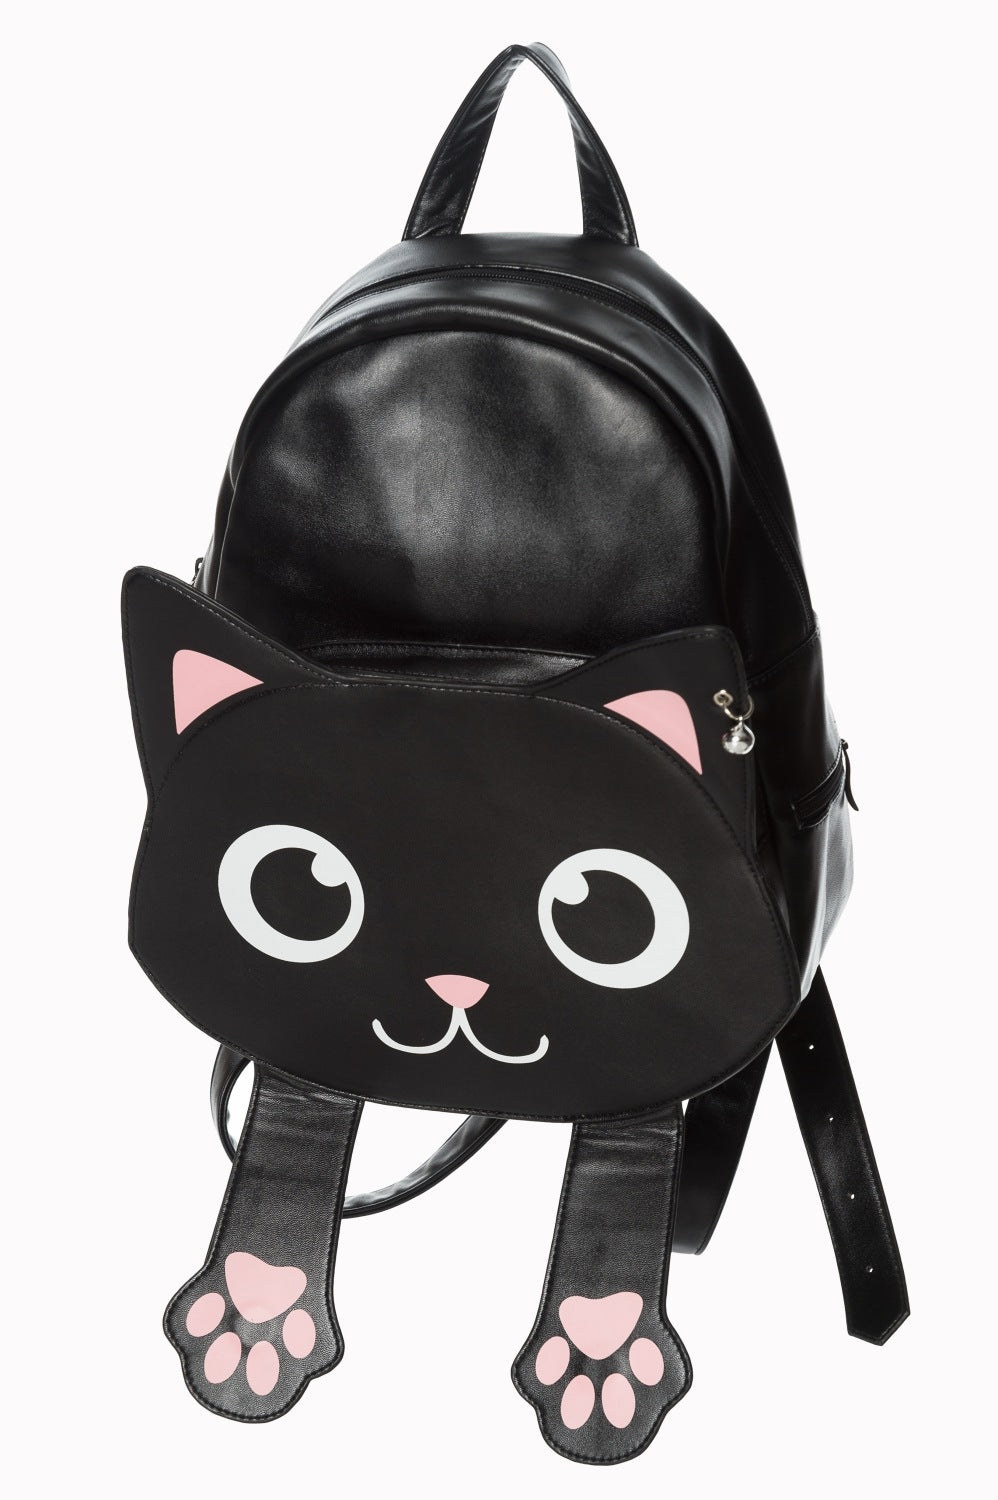 Cat print in black back pack 